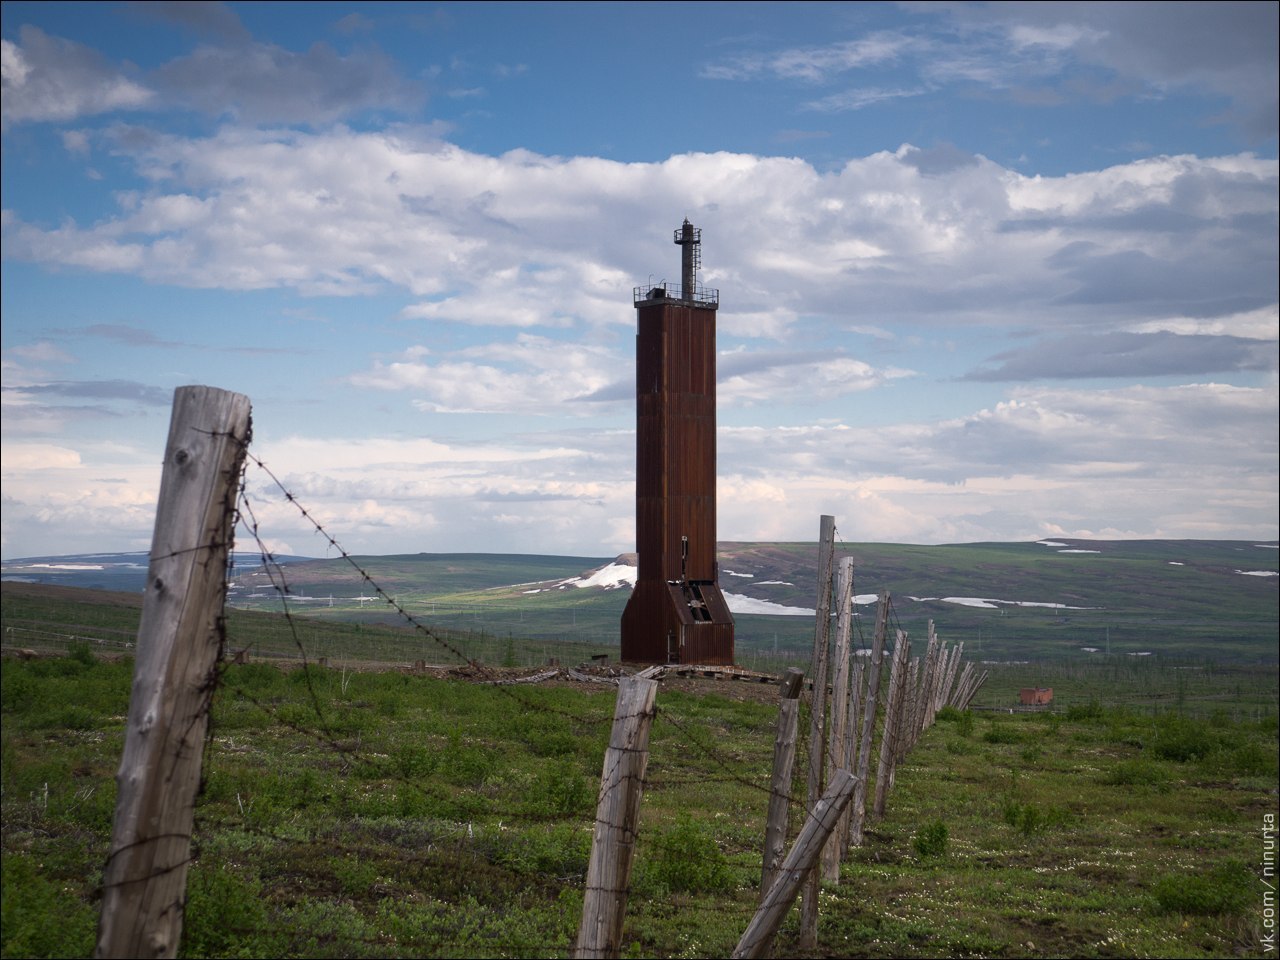 Ground measuring point, Norilsk environs. - My, Urbanphoto, Norilsk, Tundra, Abandoned, Urbanturism, Stalk, Urbantrip, Longpost